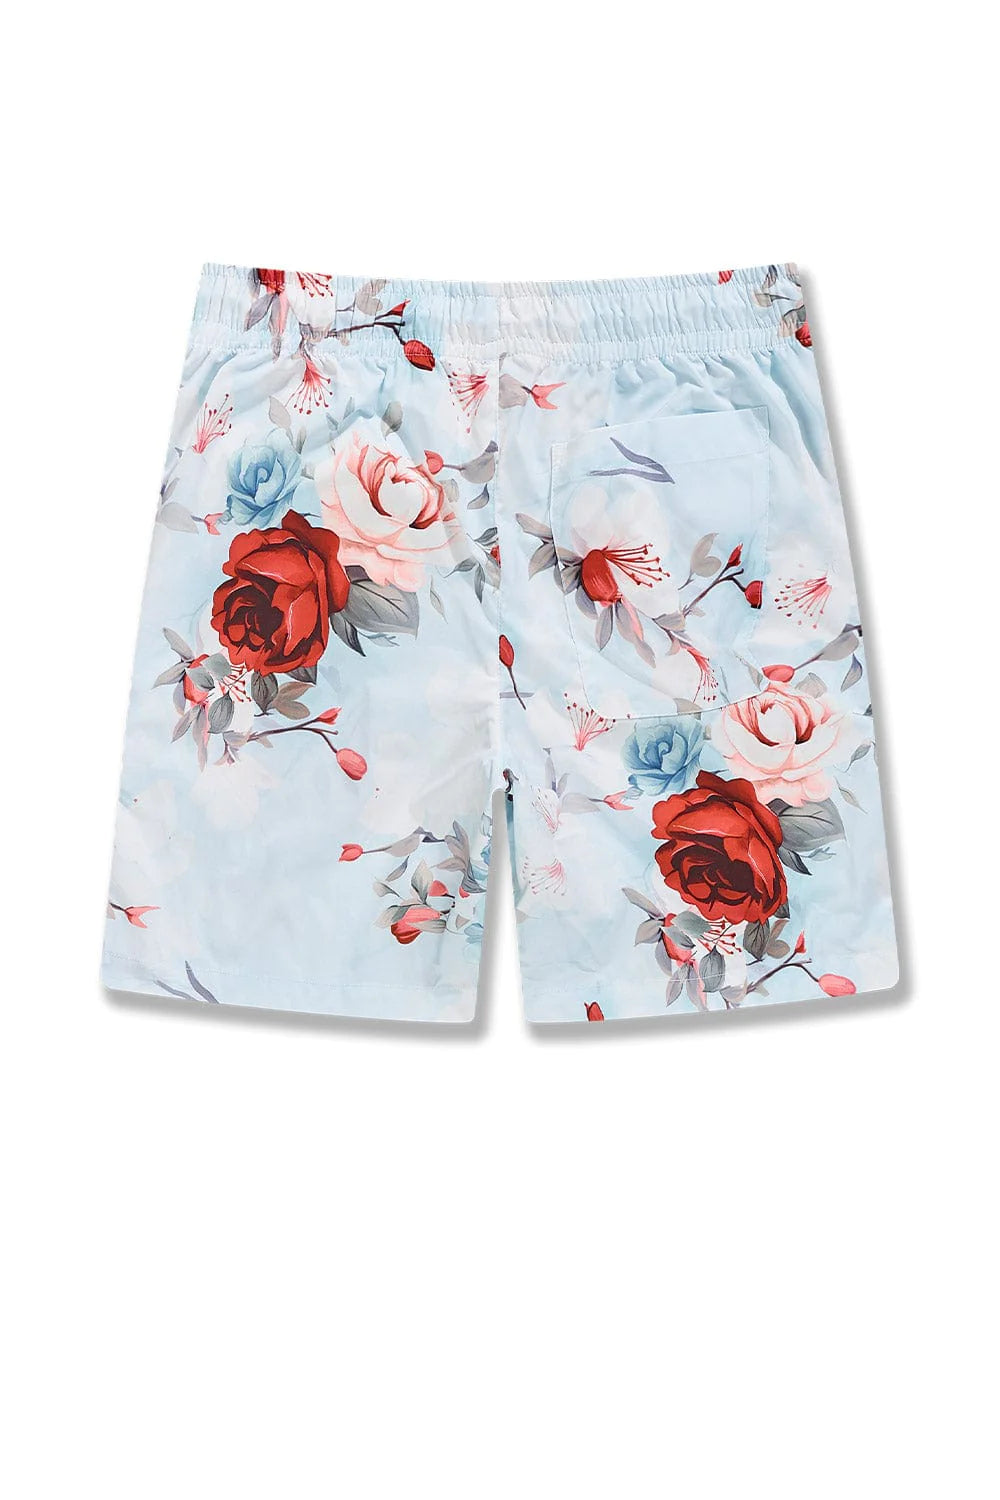 “NEW” Jordan Craig Retro Lounge Shorts (Red Floral)